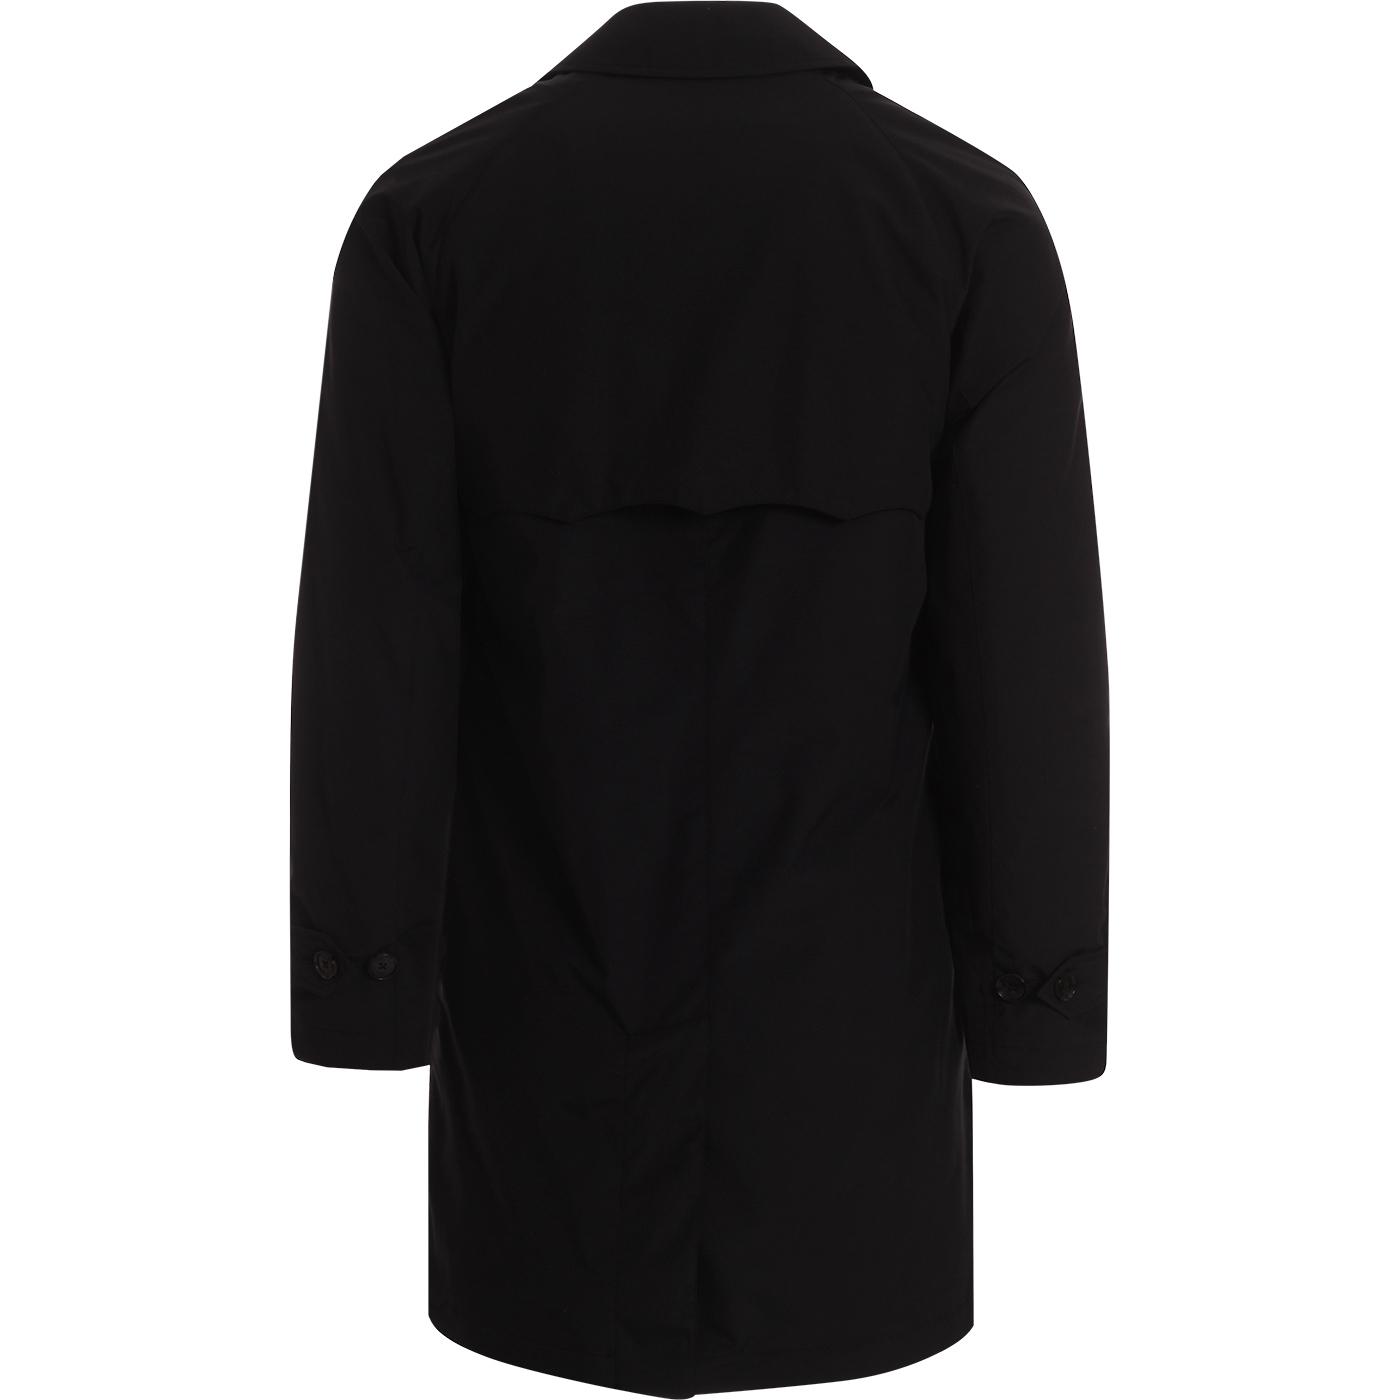 BARACUTA G10 Detachable Lining Mod Raincoat in Black